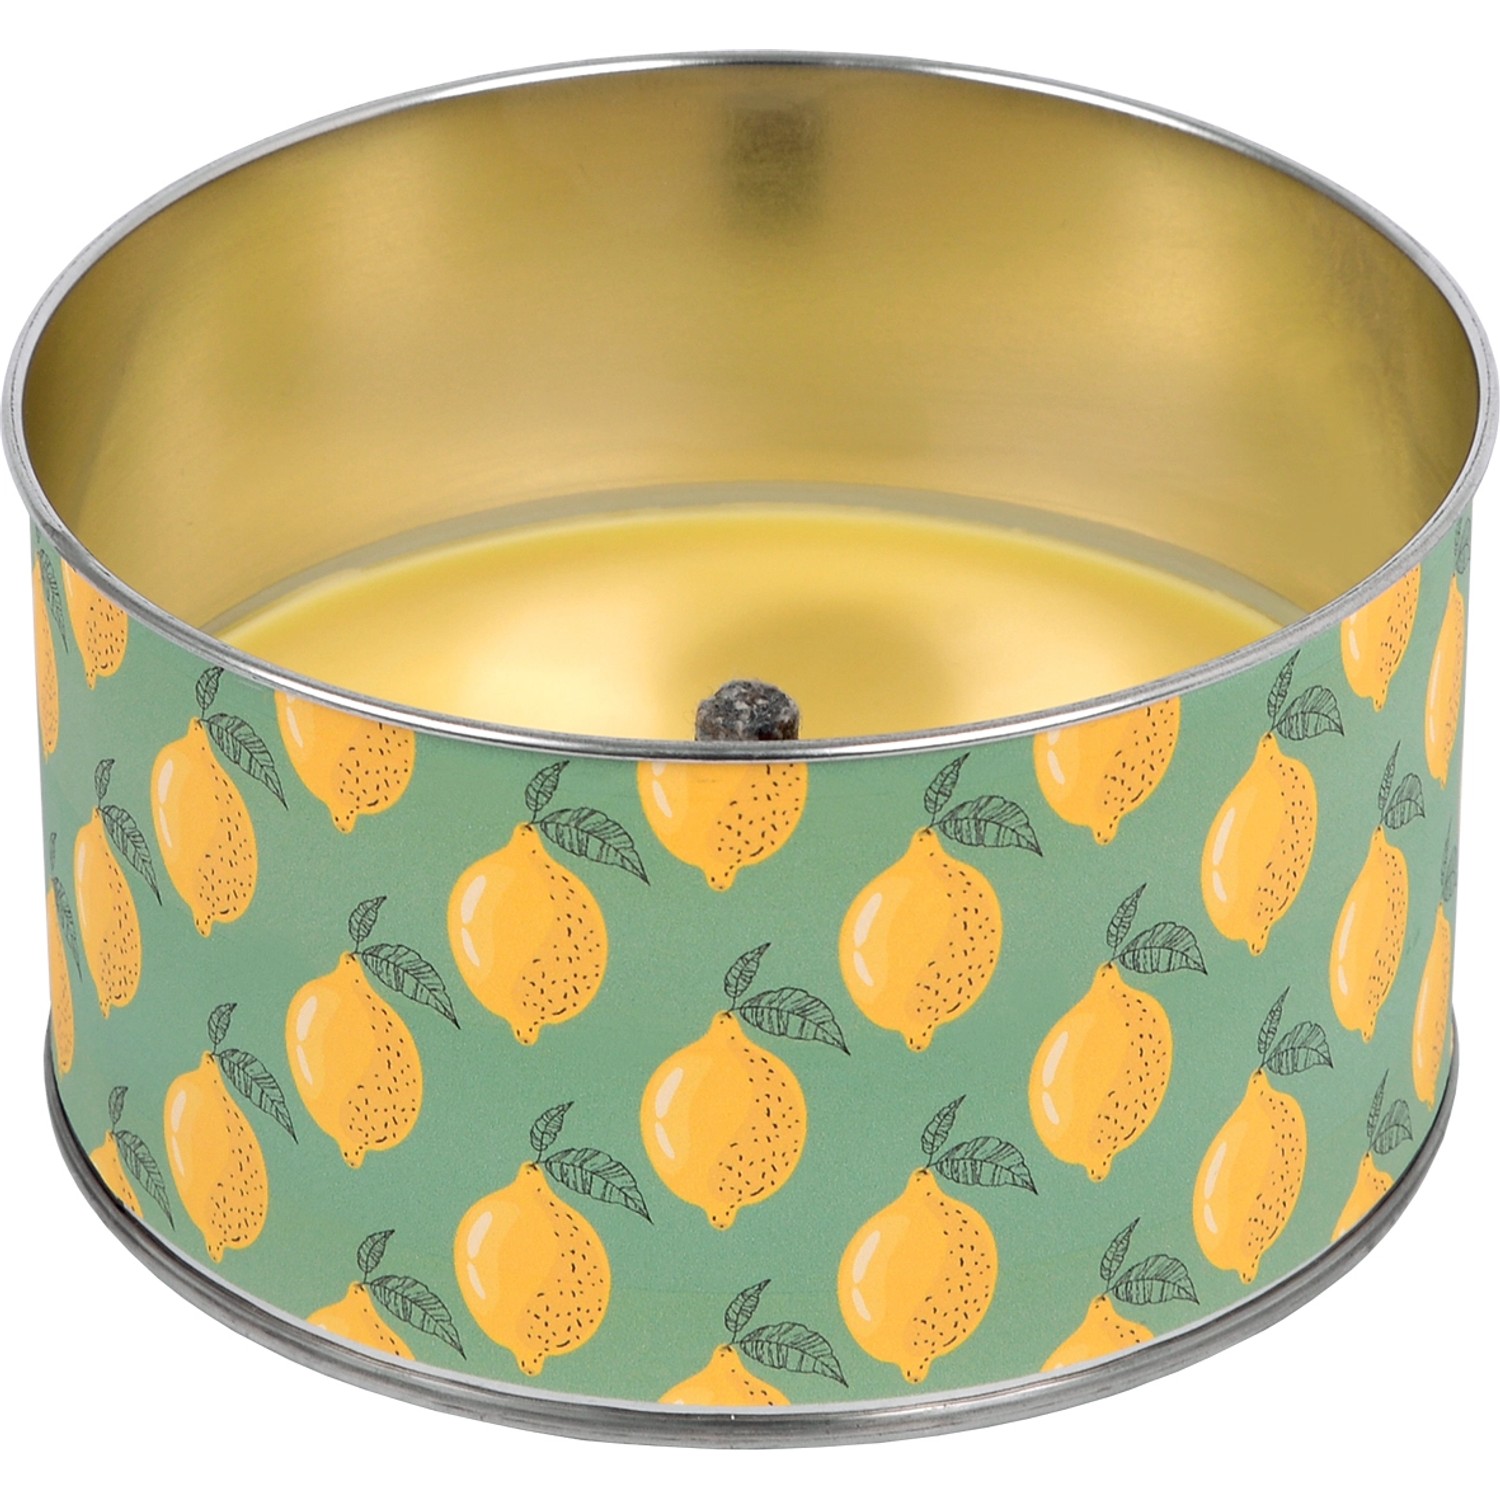 Citronella Kerze Cup groß Hell-Gelb 15,3 cm x 8,4 cm